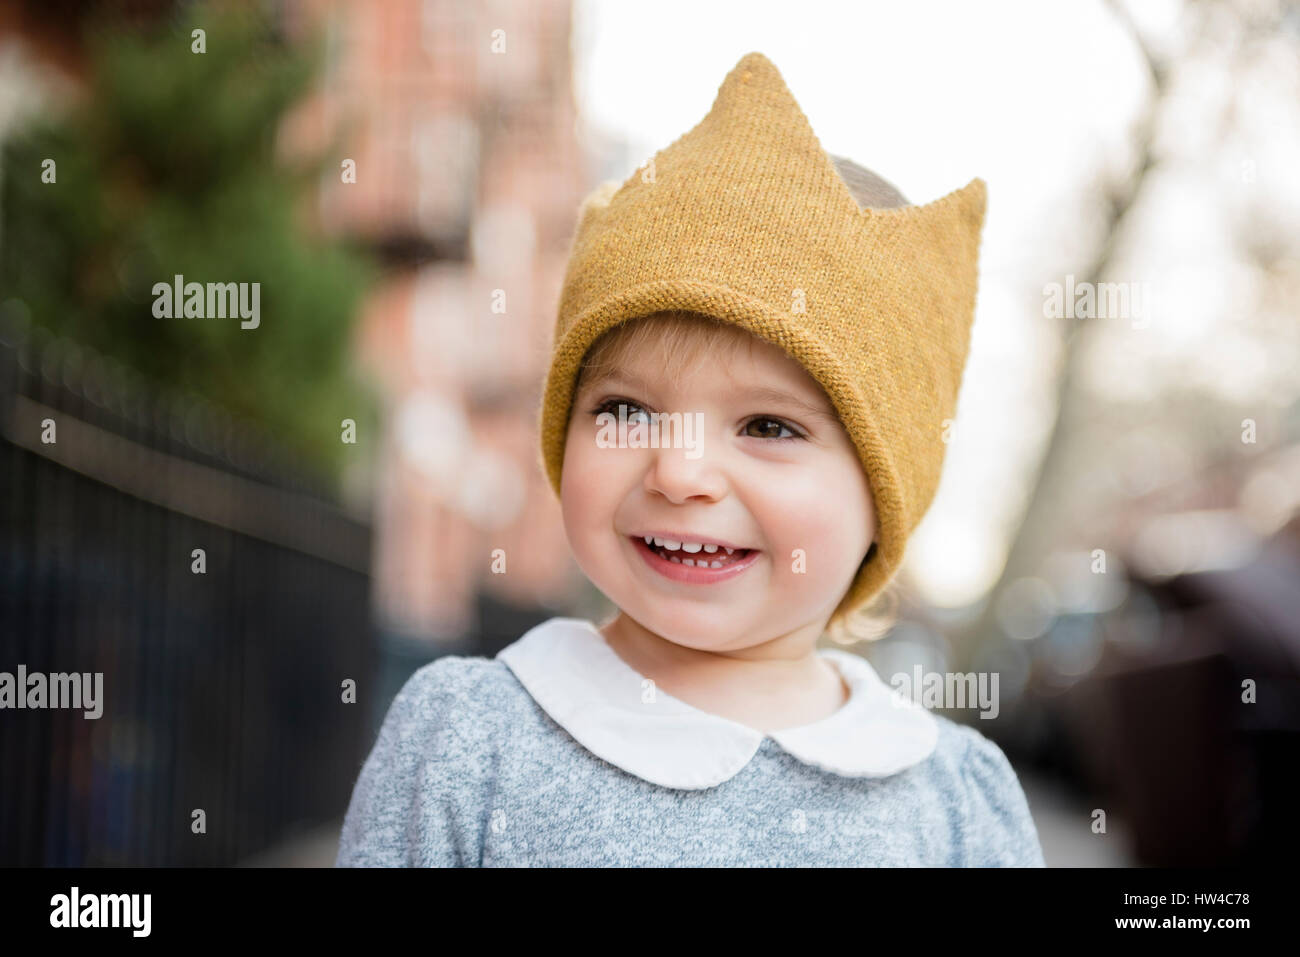 Smiling Caucasian baby girl wearing crown hat Stock Photo